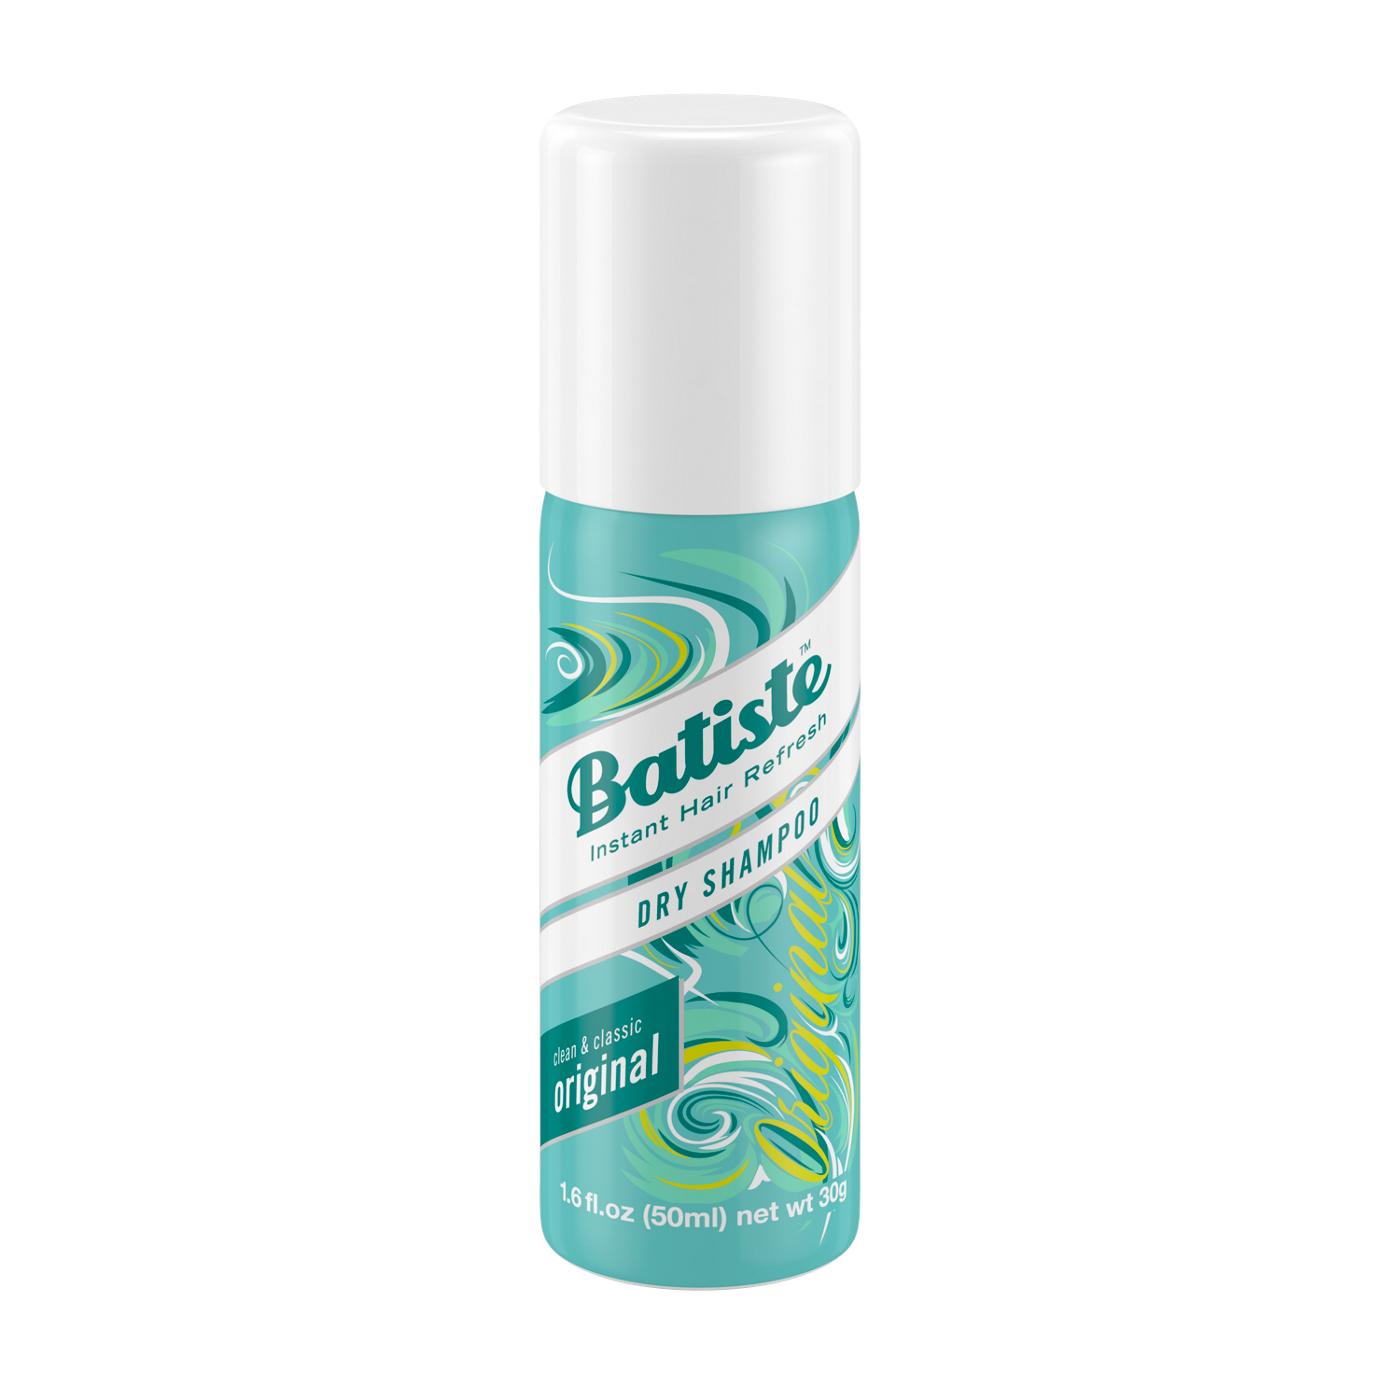 Batiste Mini Dry Shampoo - Original; image 1 of 4